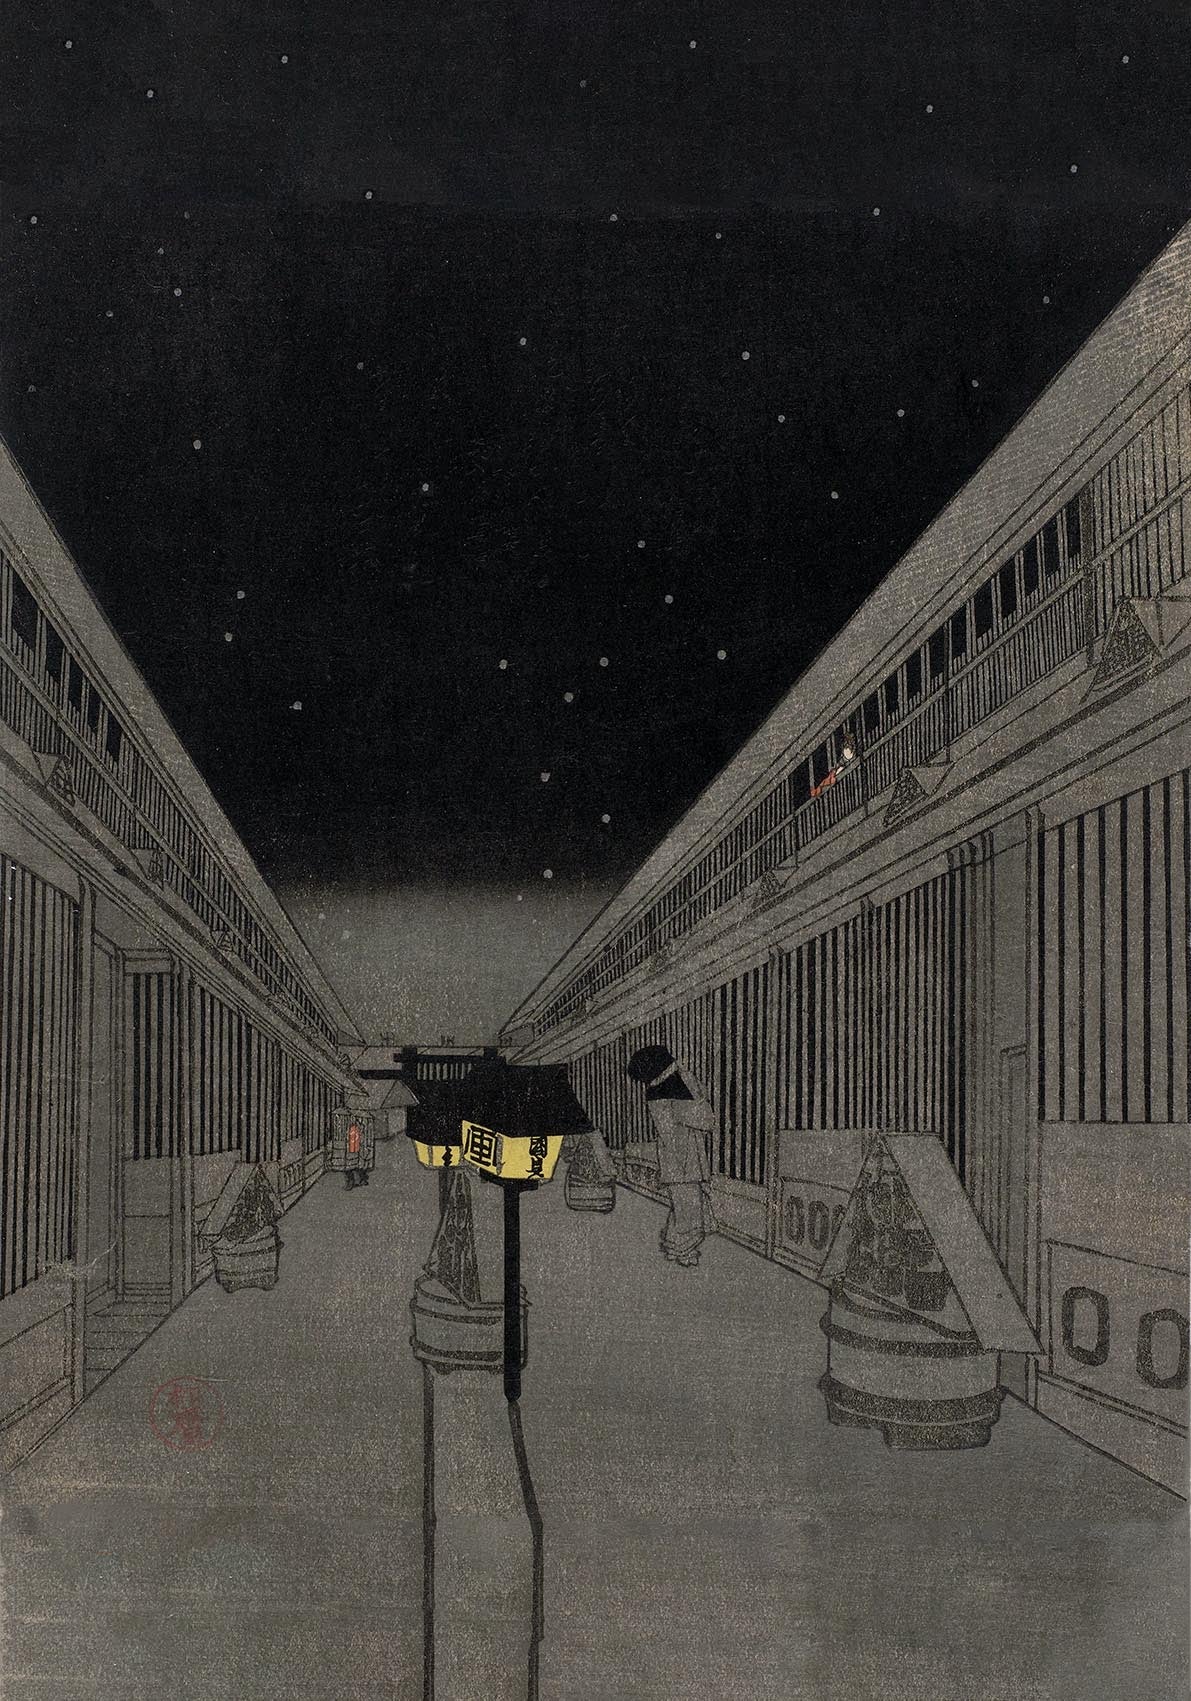 Yoshiwara by night by Kunisada